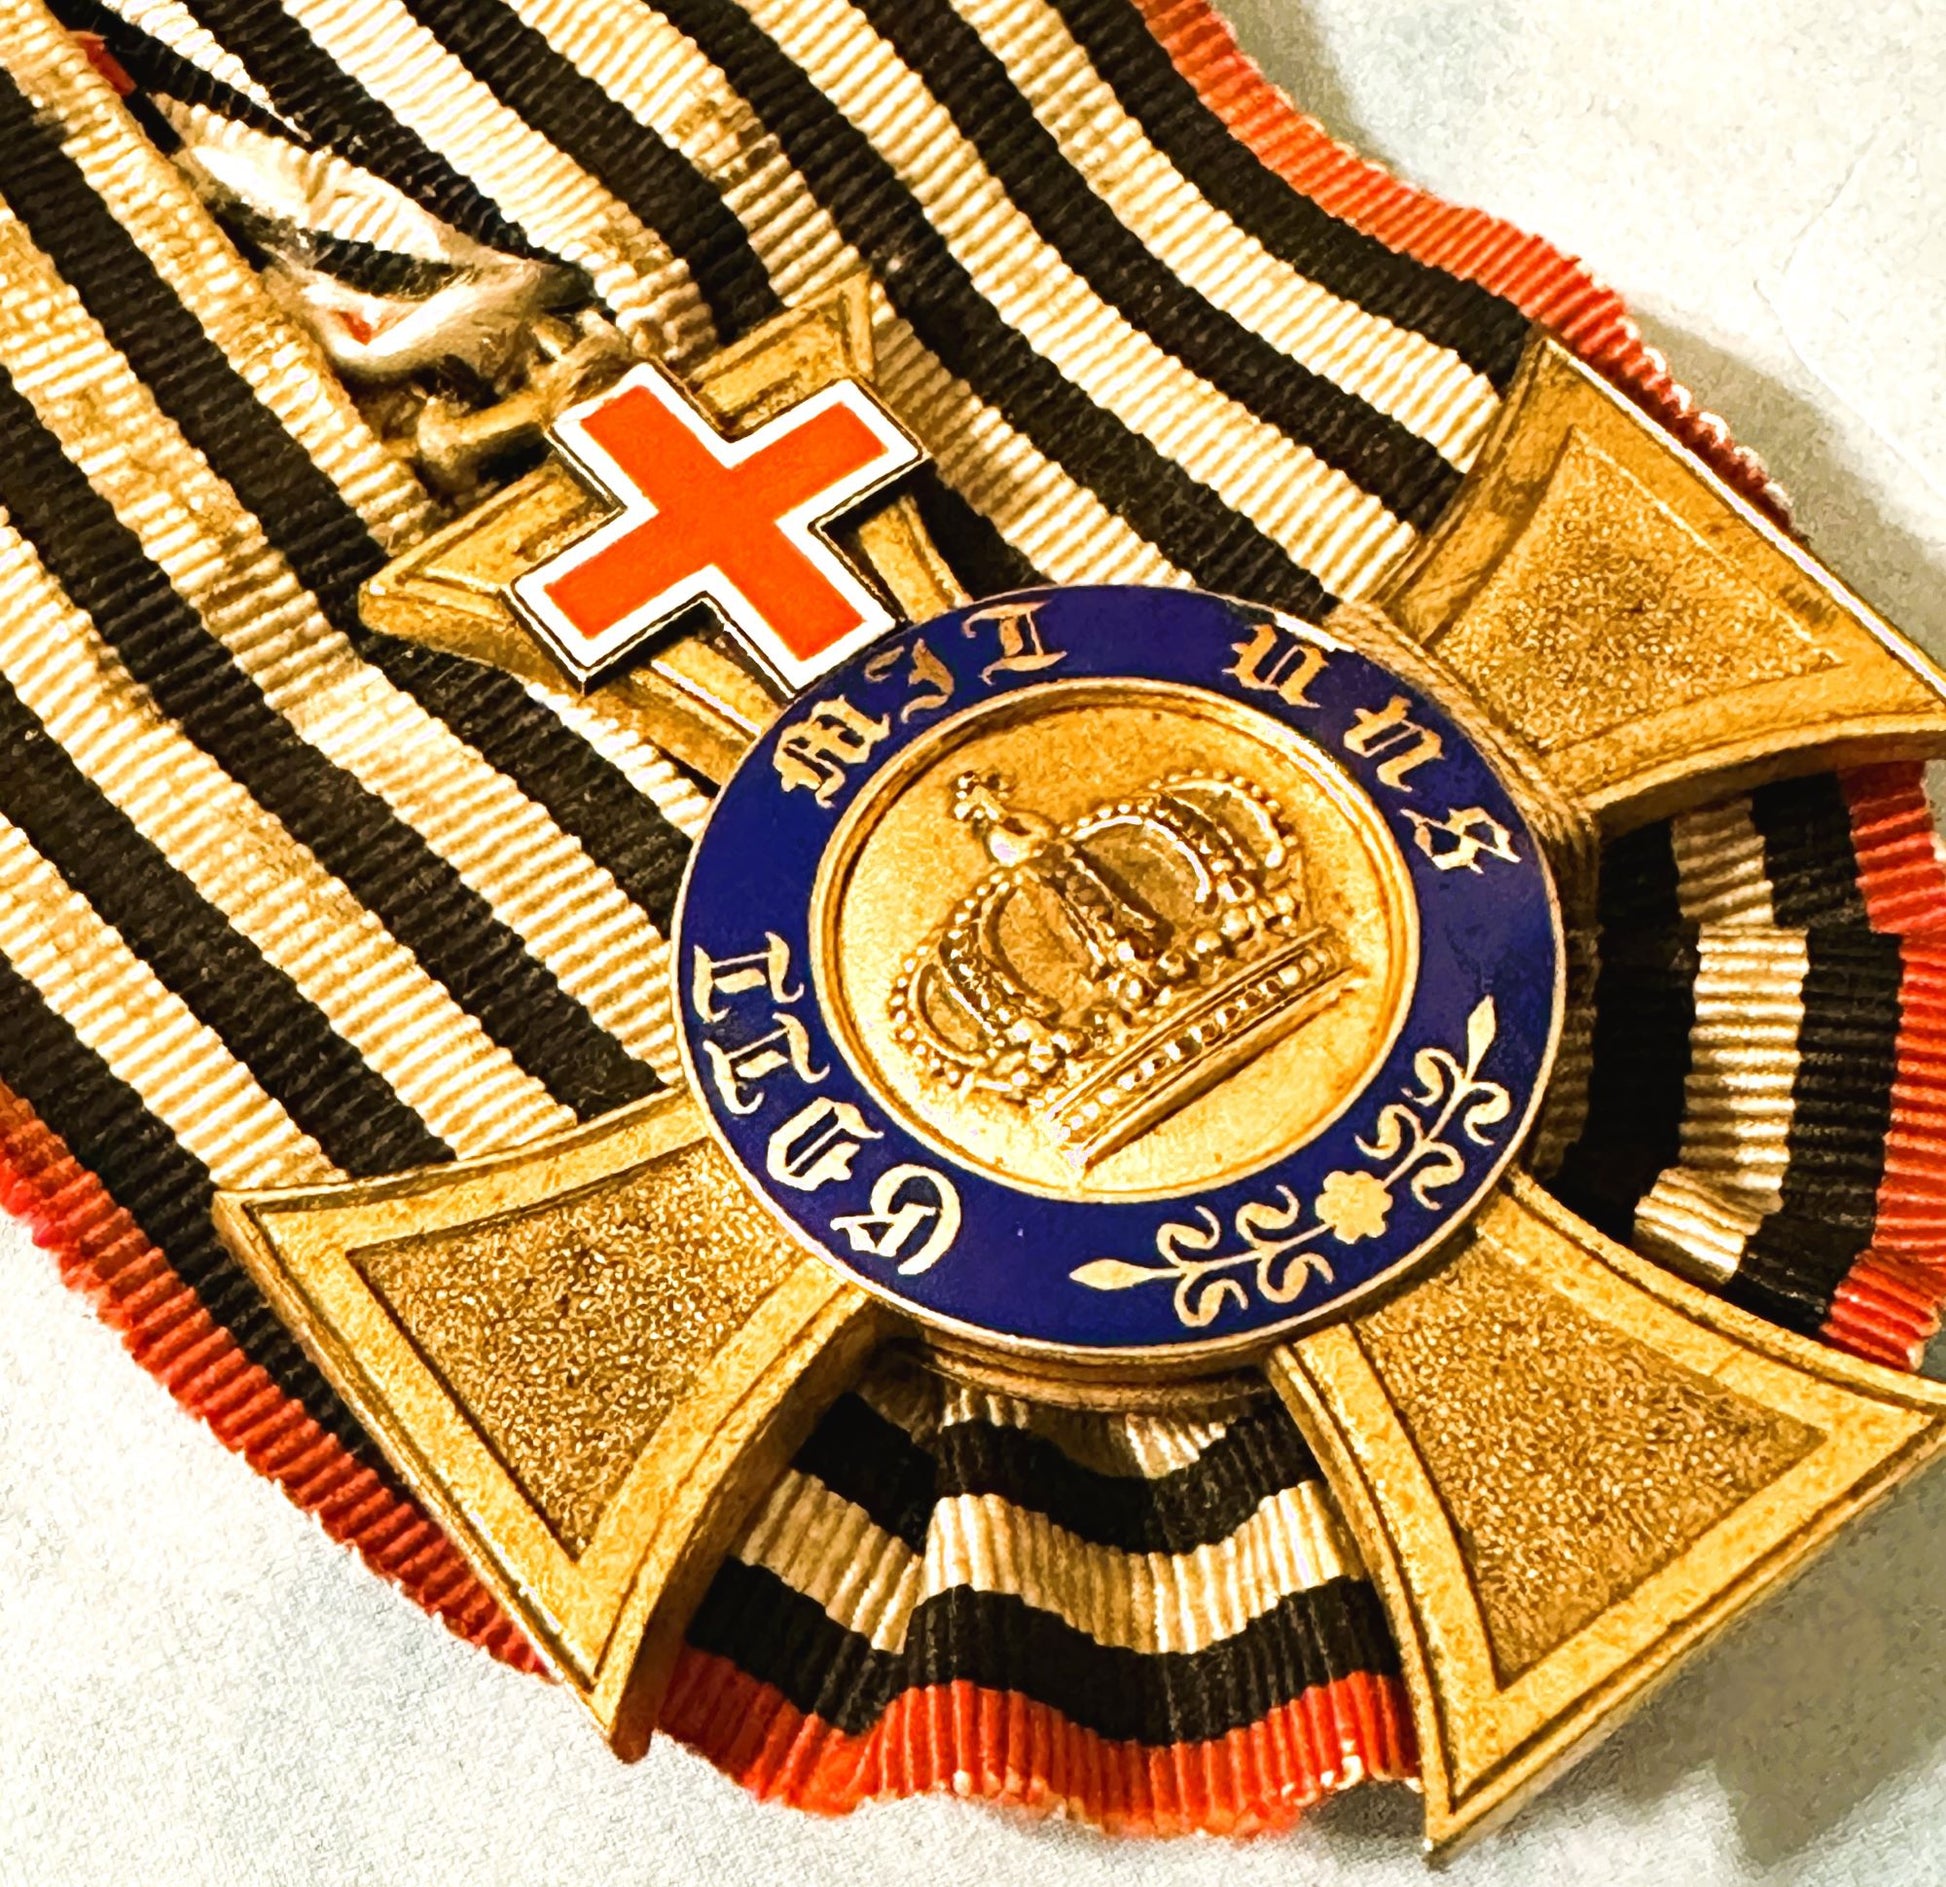 Prussia - Crown Order 4th Class - Geneva Cross - Derrittmeister Militaria Group